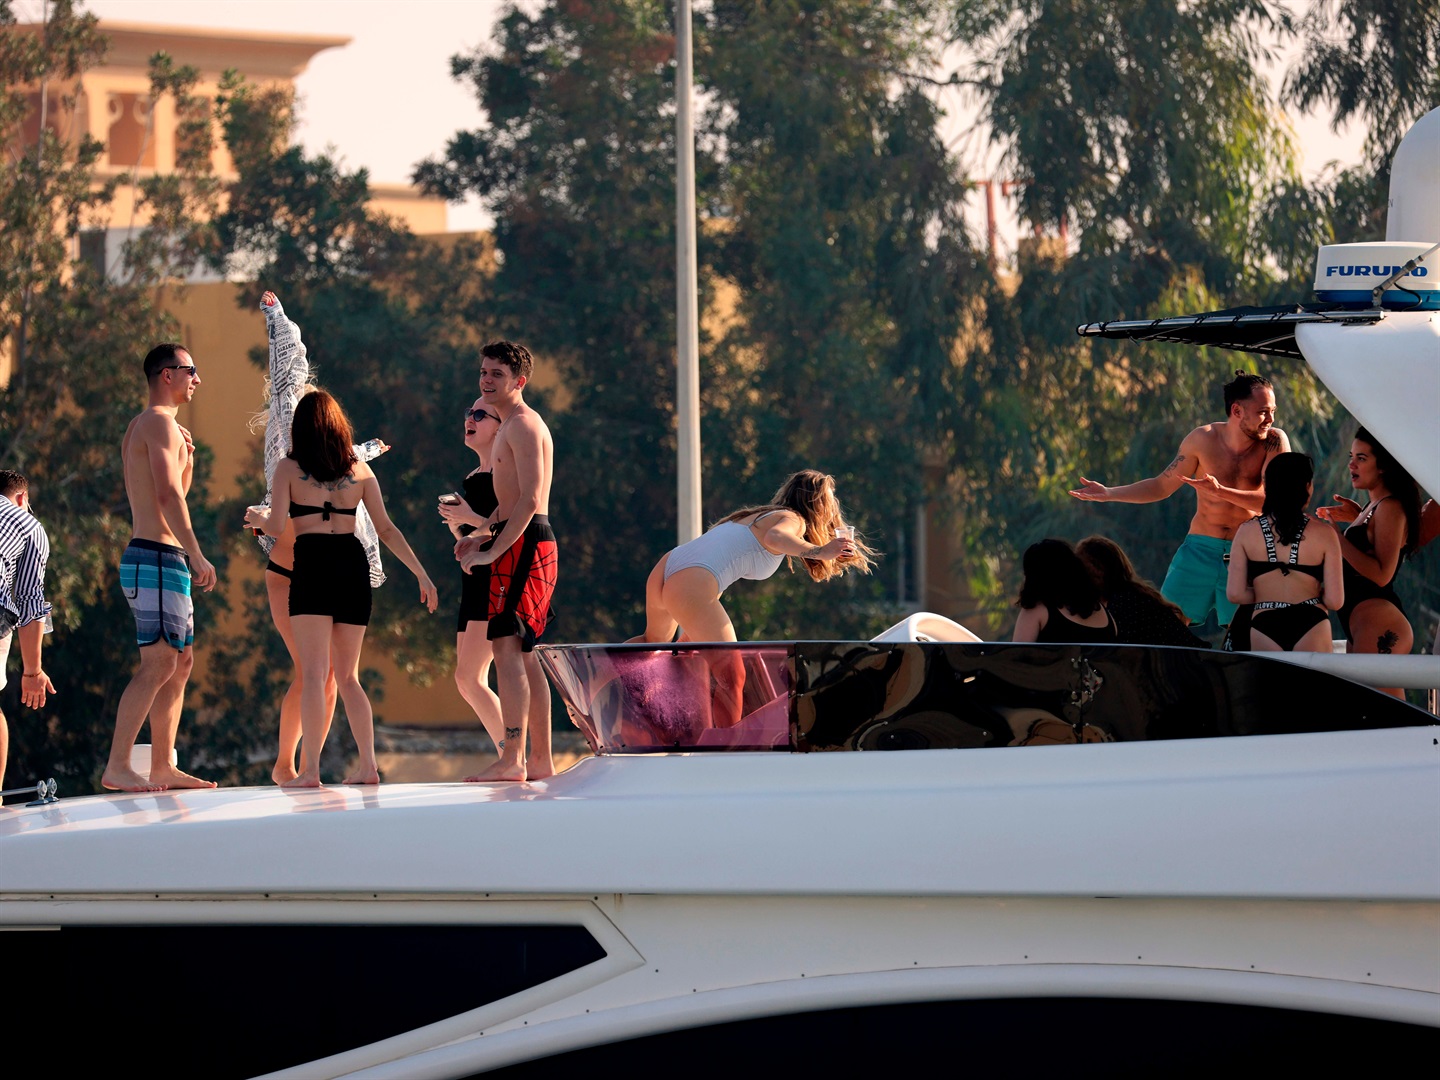 Expats partying on a luxury yacht docked on Dubai creek. KARIM SAHIB/AFP via Getty Images